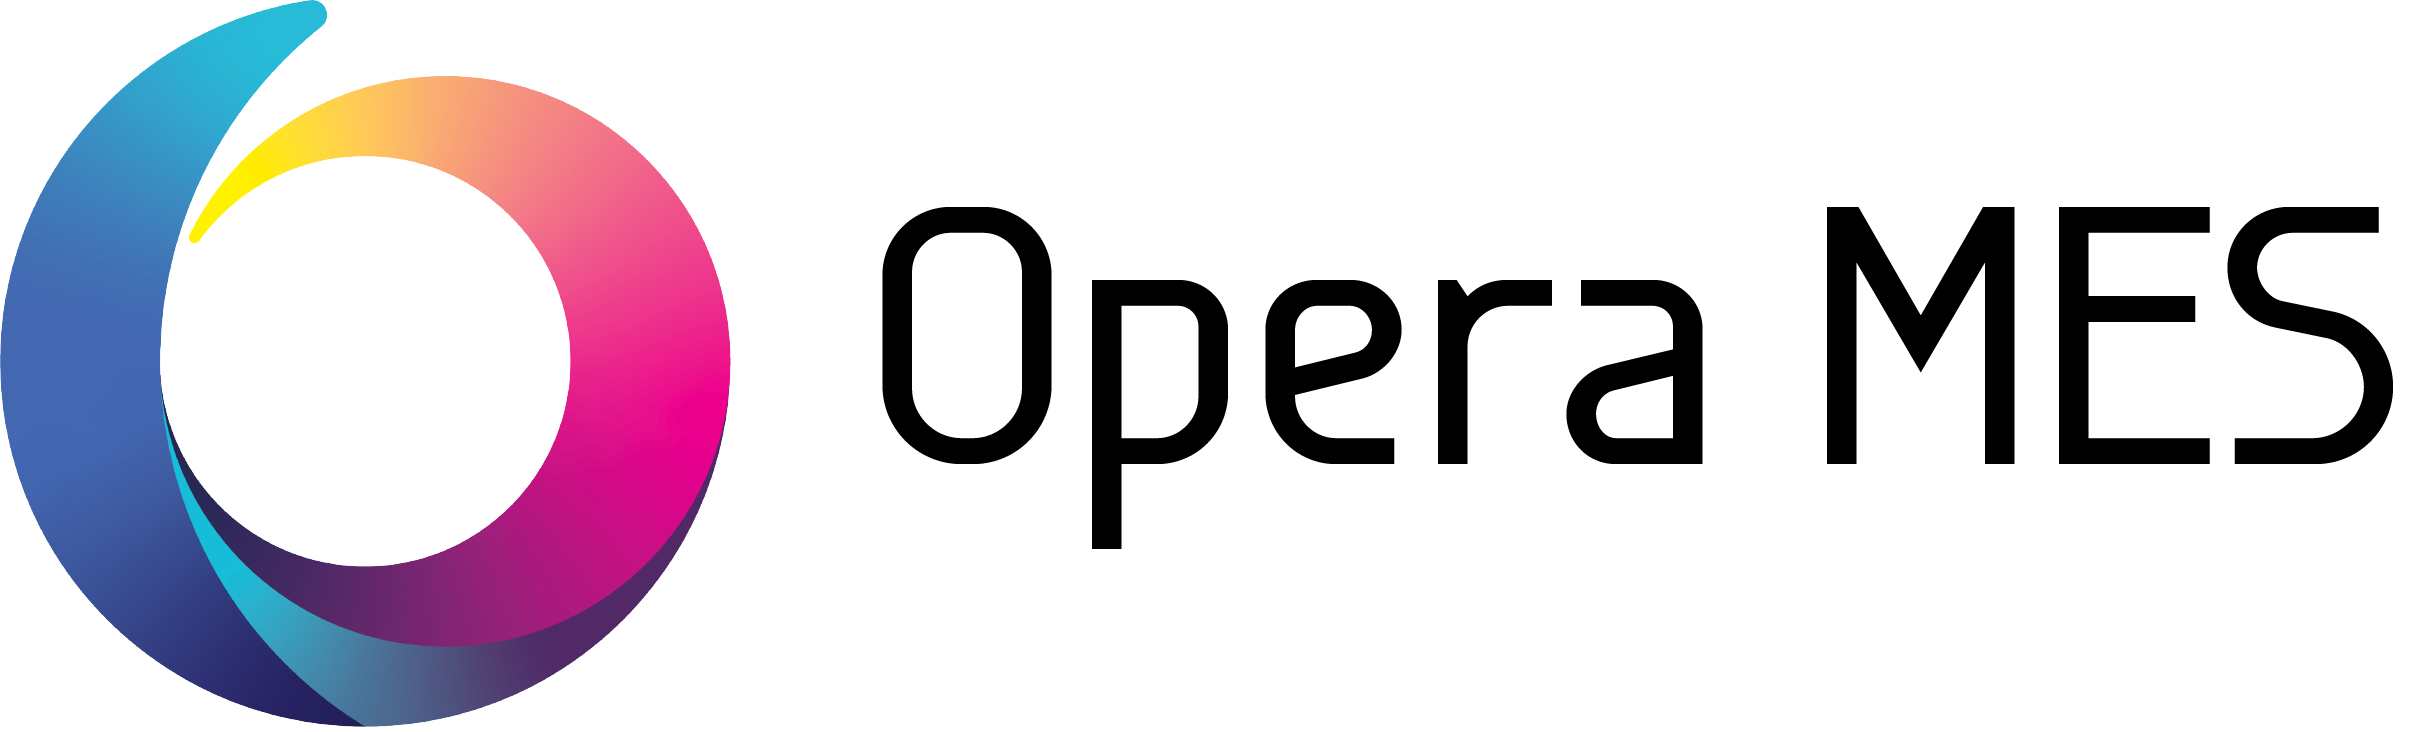 Celtis - Logo OPERA